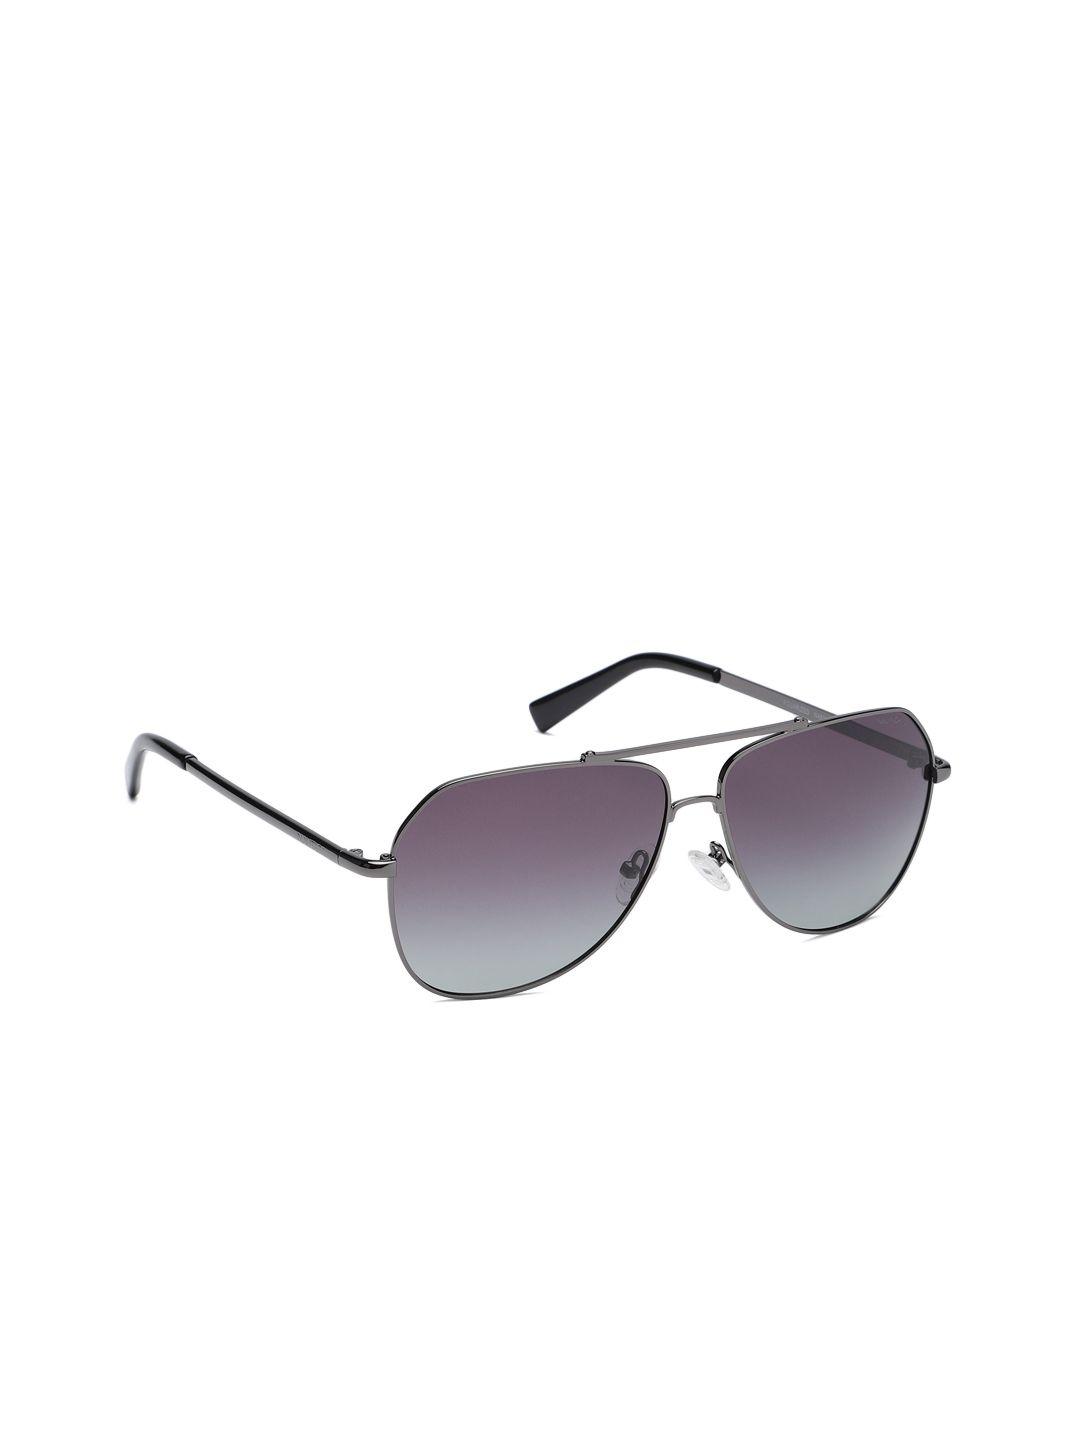 nautica men grey lens & gunmetal-toned aviator sunglasses with uv protection 4636p c3 60 s